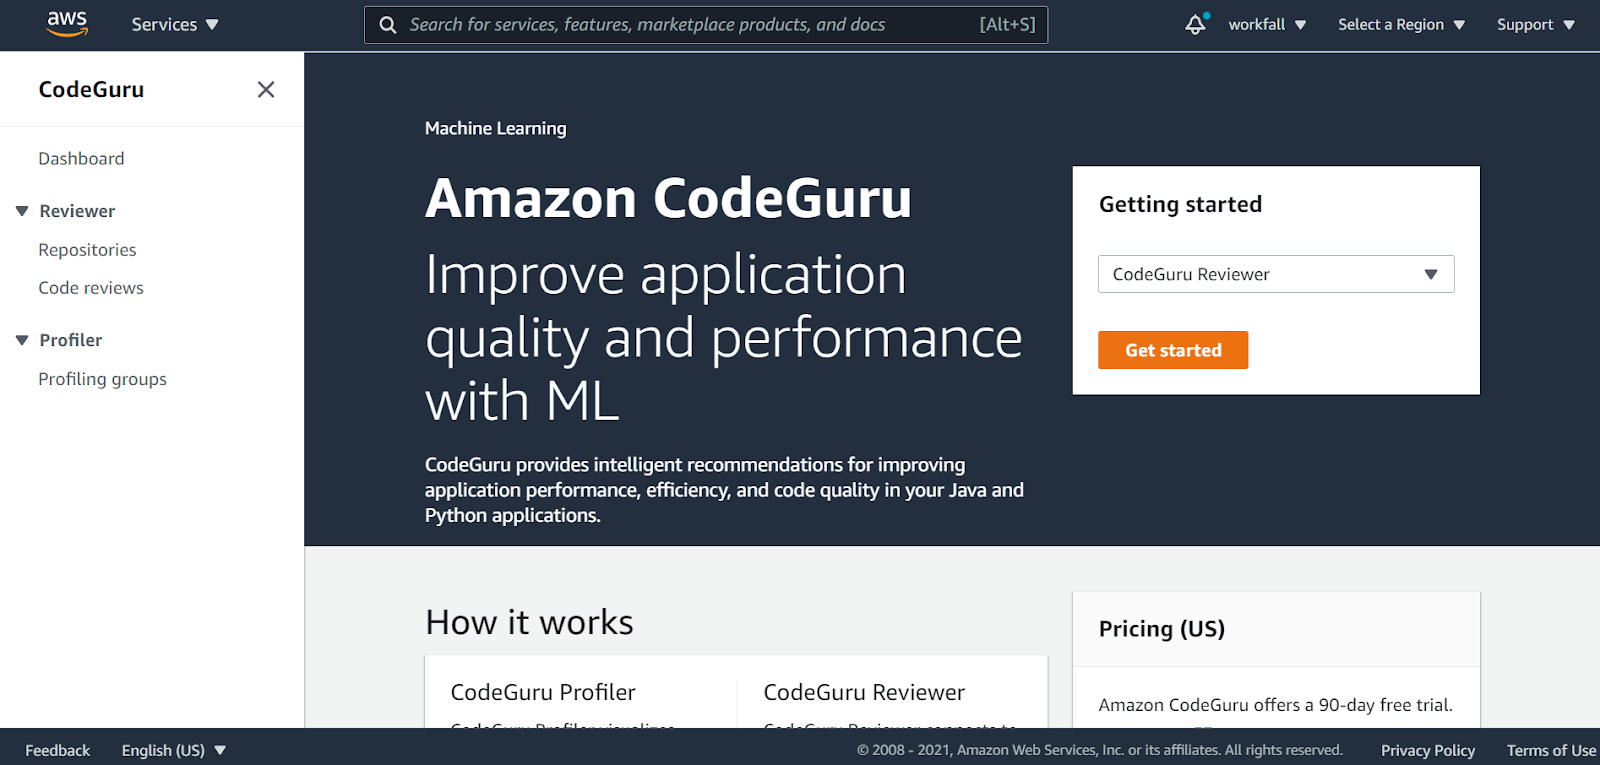 How to raise code quality for python applications using Amazon CodeGuru?